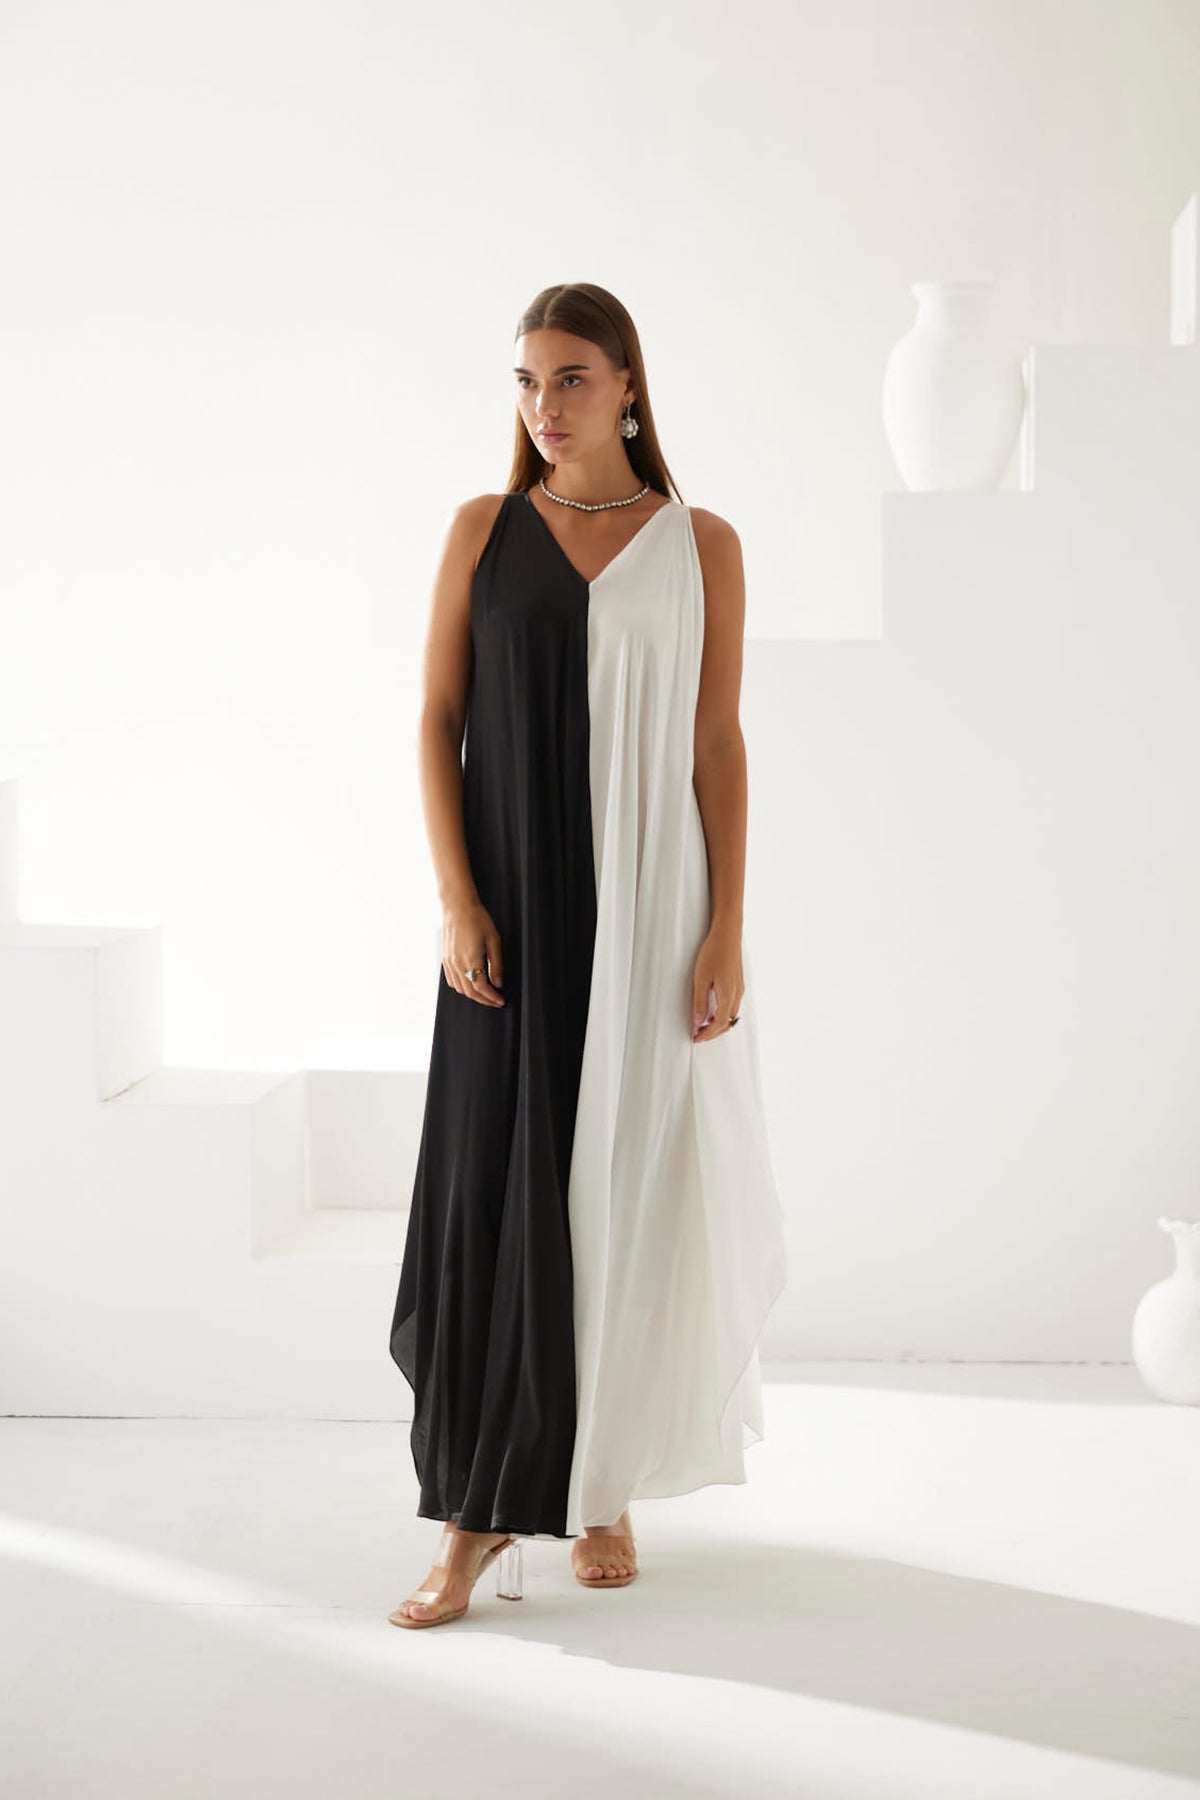 Black And White Colorblock Maxi Dress